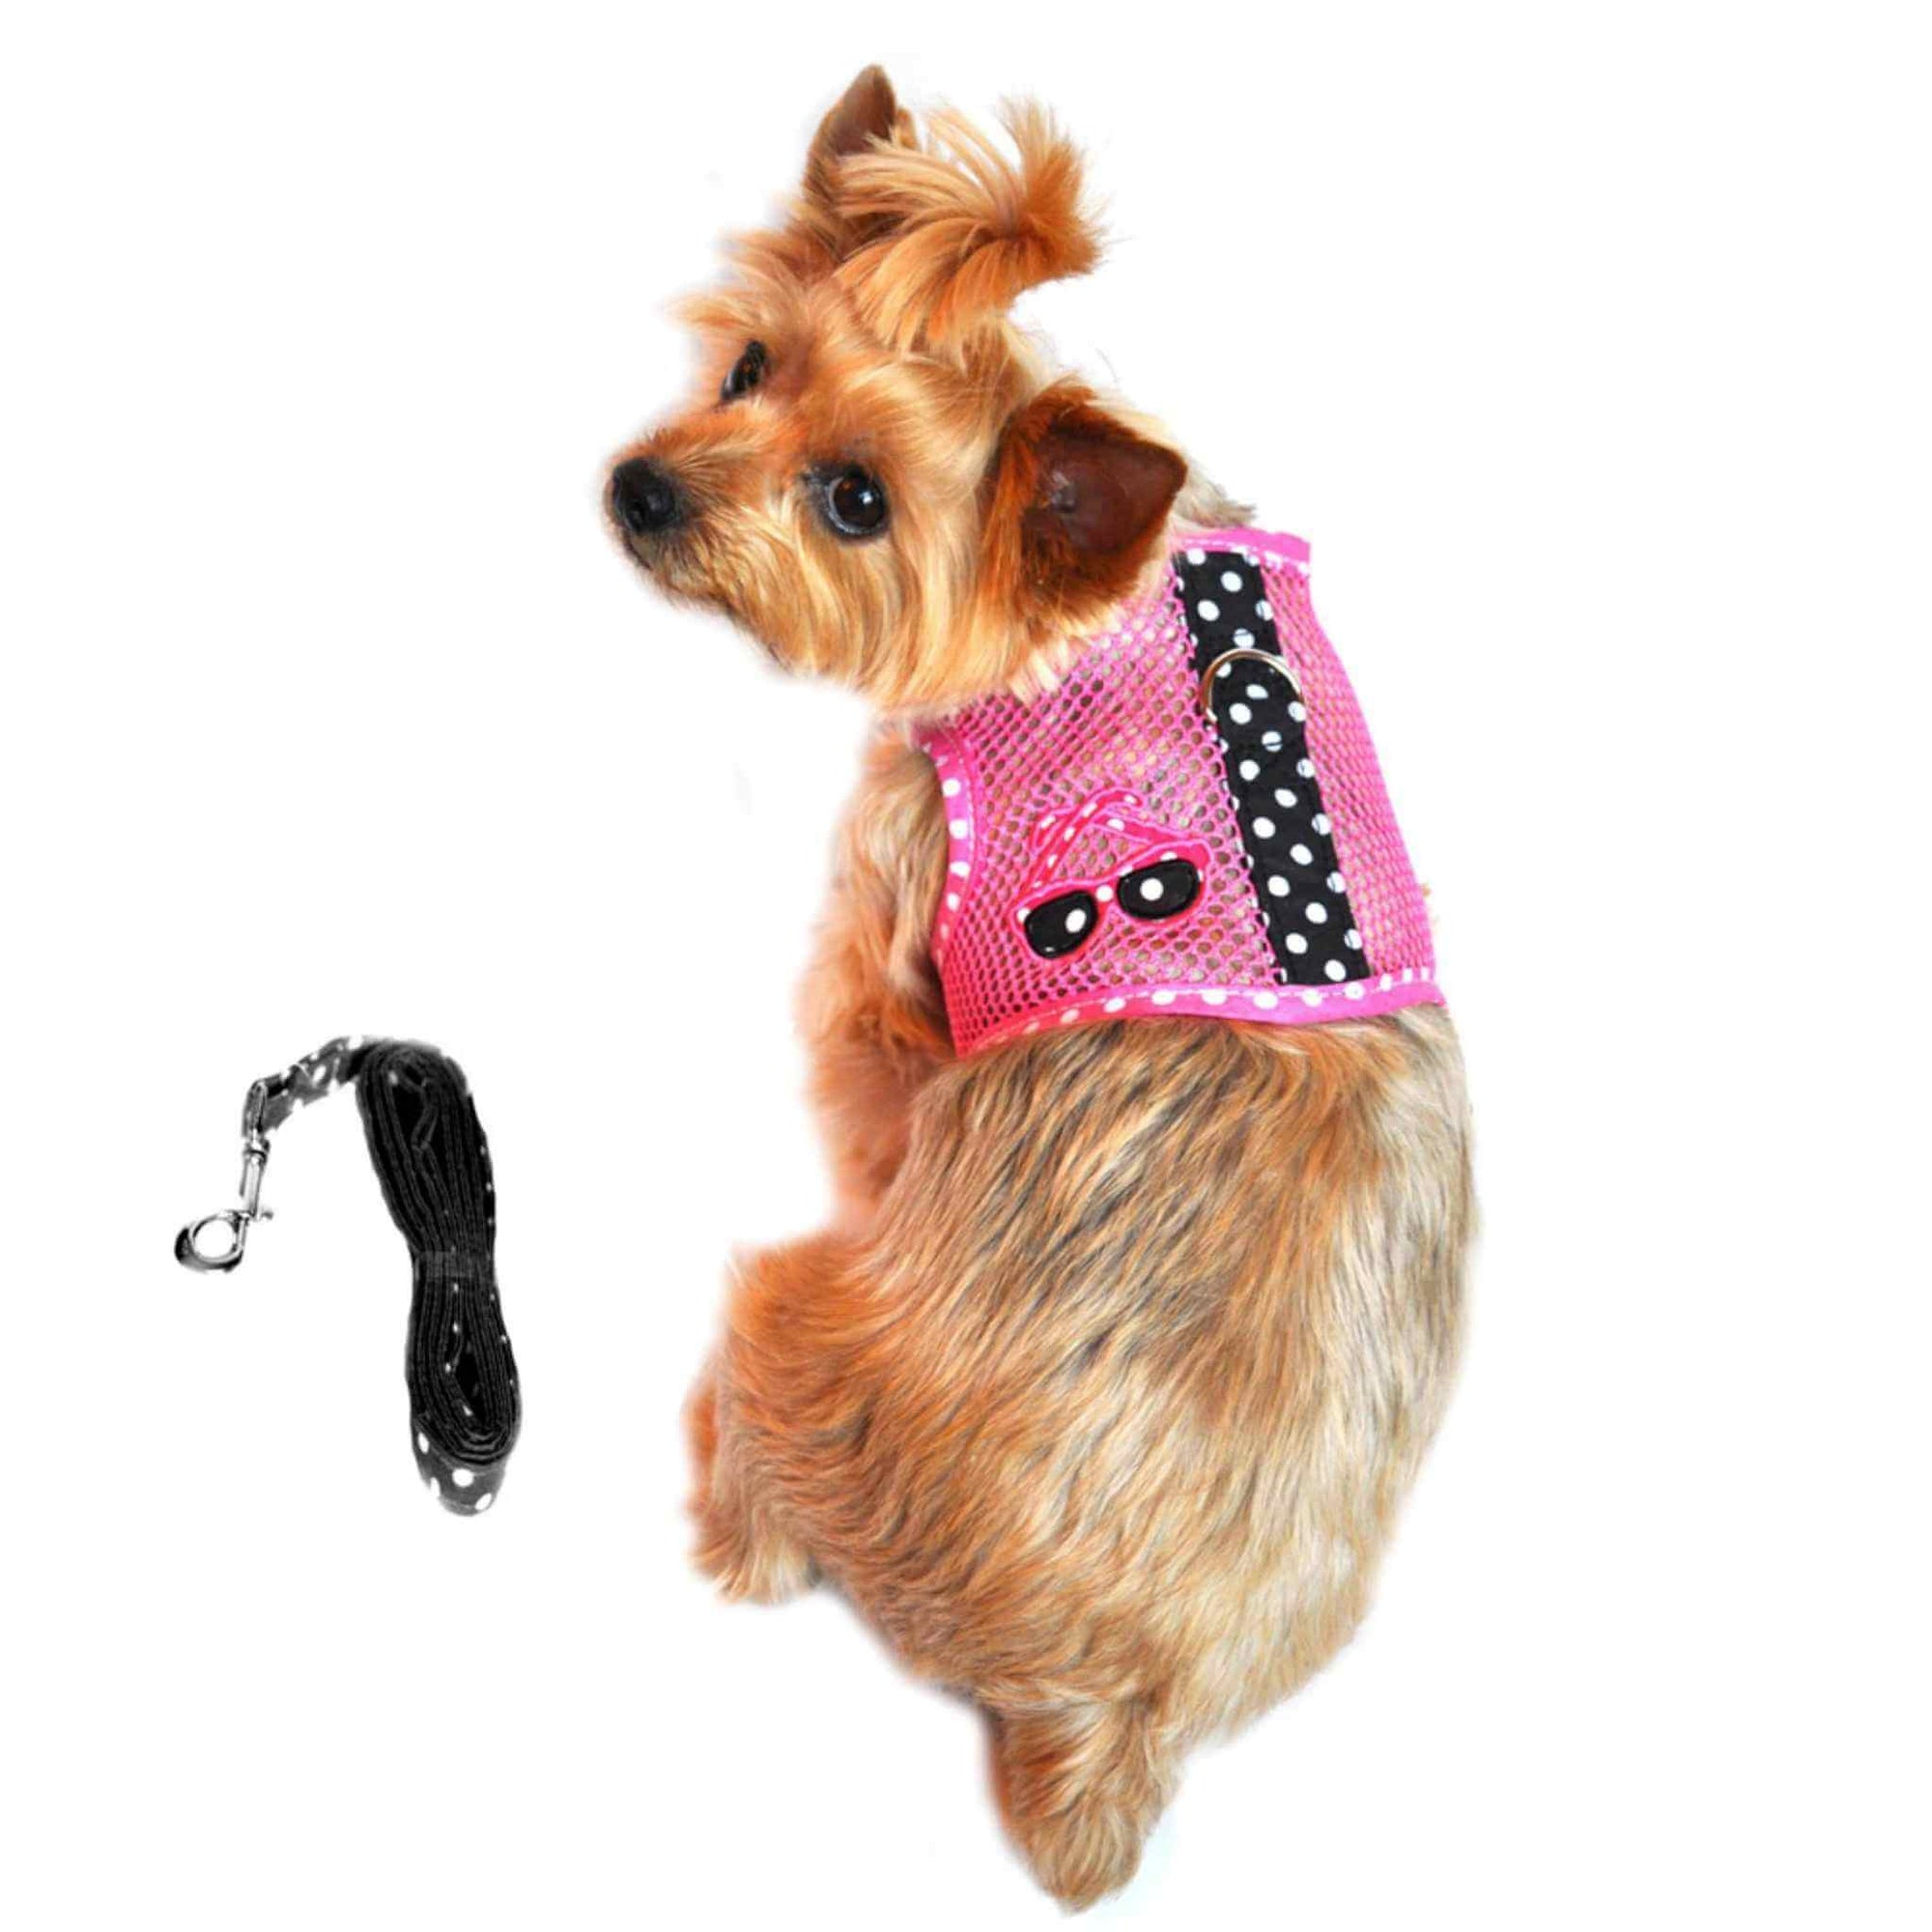 Cool Mesh Dog Harness - Sunglasses Pink and Black Polka Dot on a yorkie